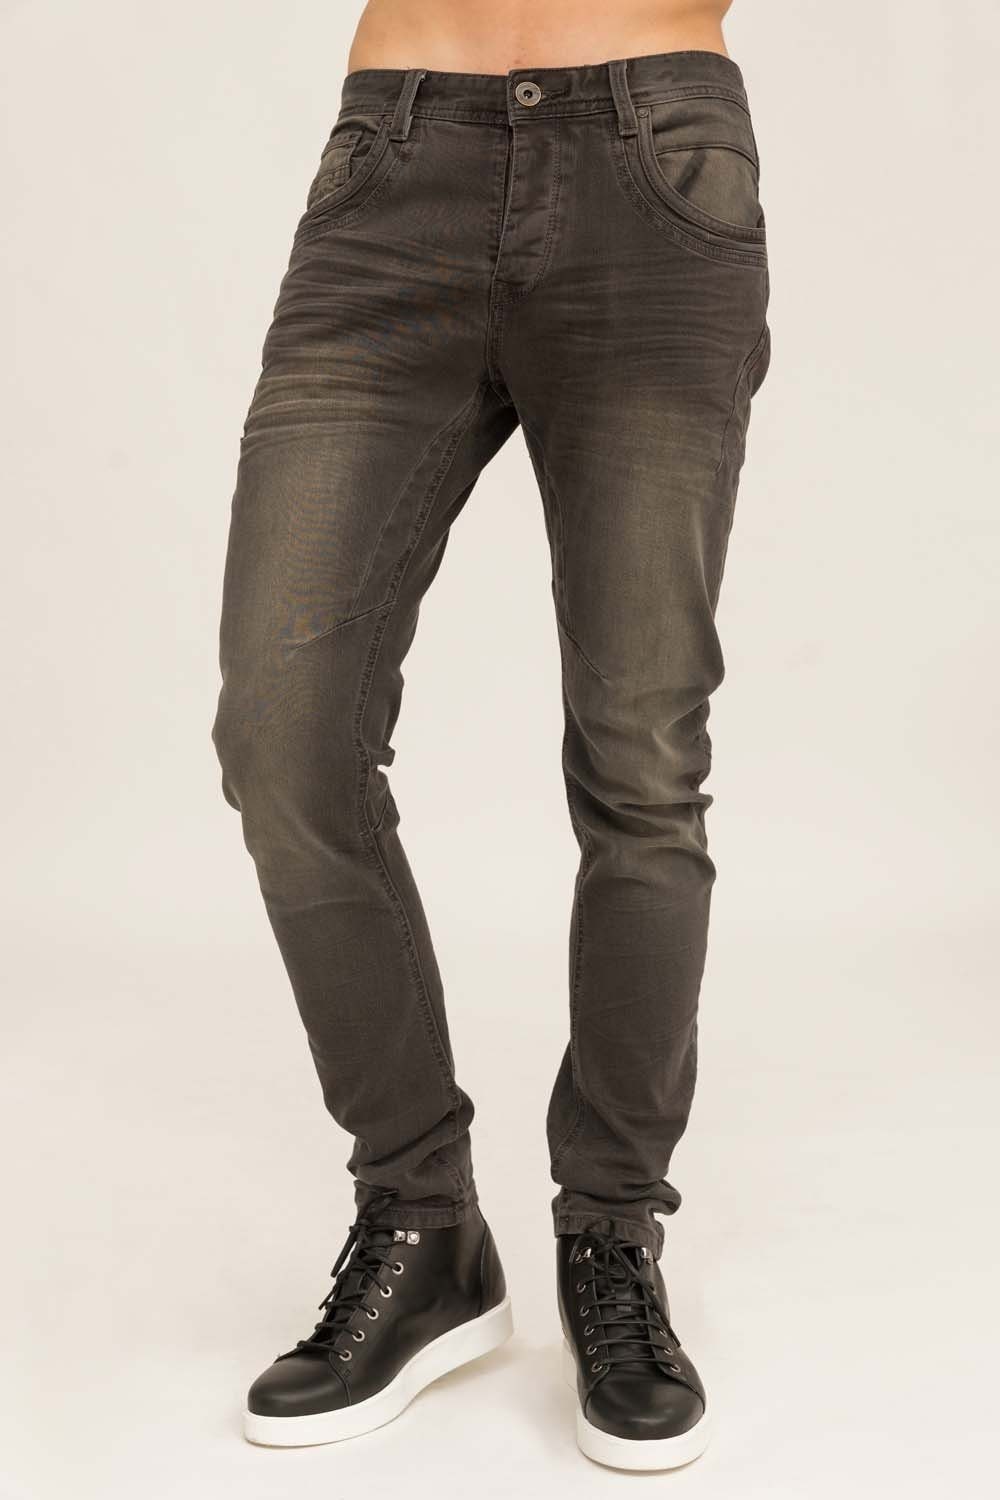 Trueprodigy NU 15% KORTING: trueprodigy Tapered Fit-jeans Vex #603